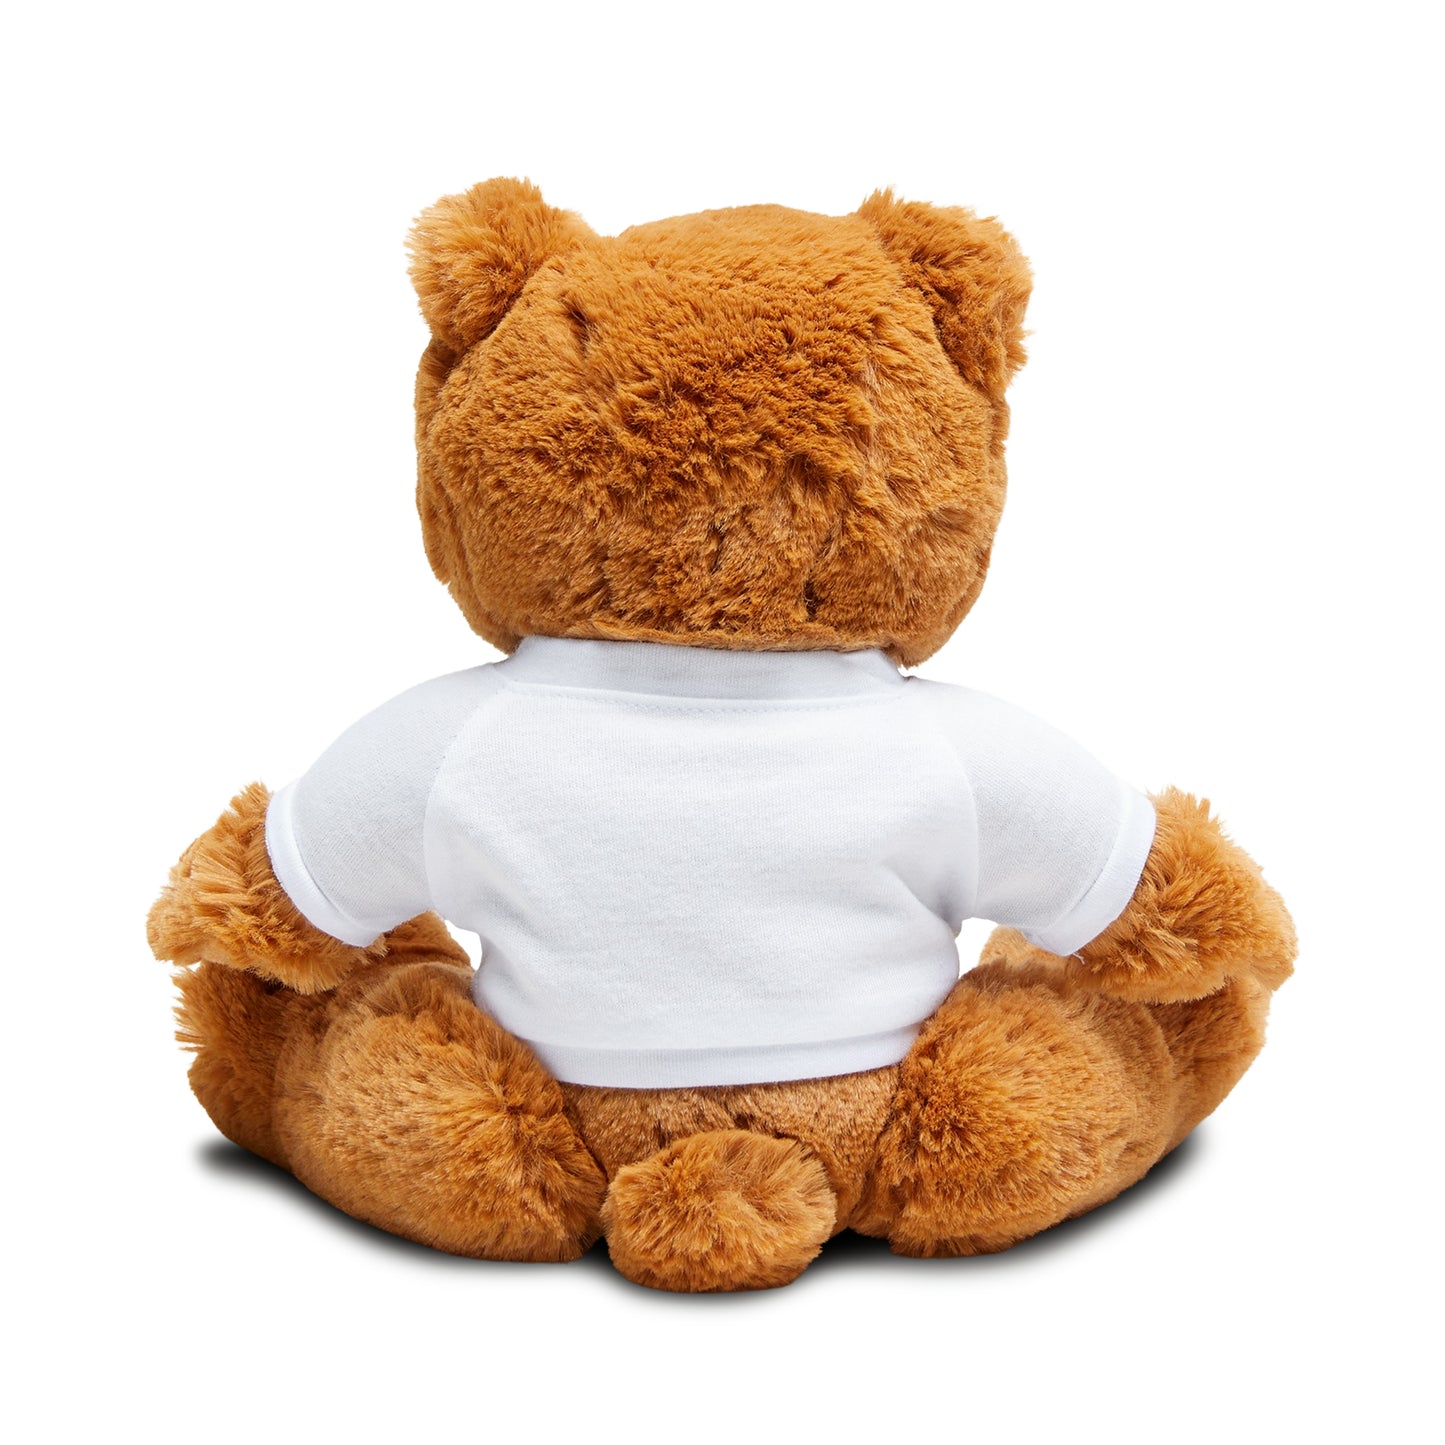 On Always Being An Outsider - Teddy Bear